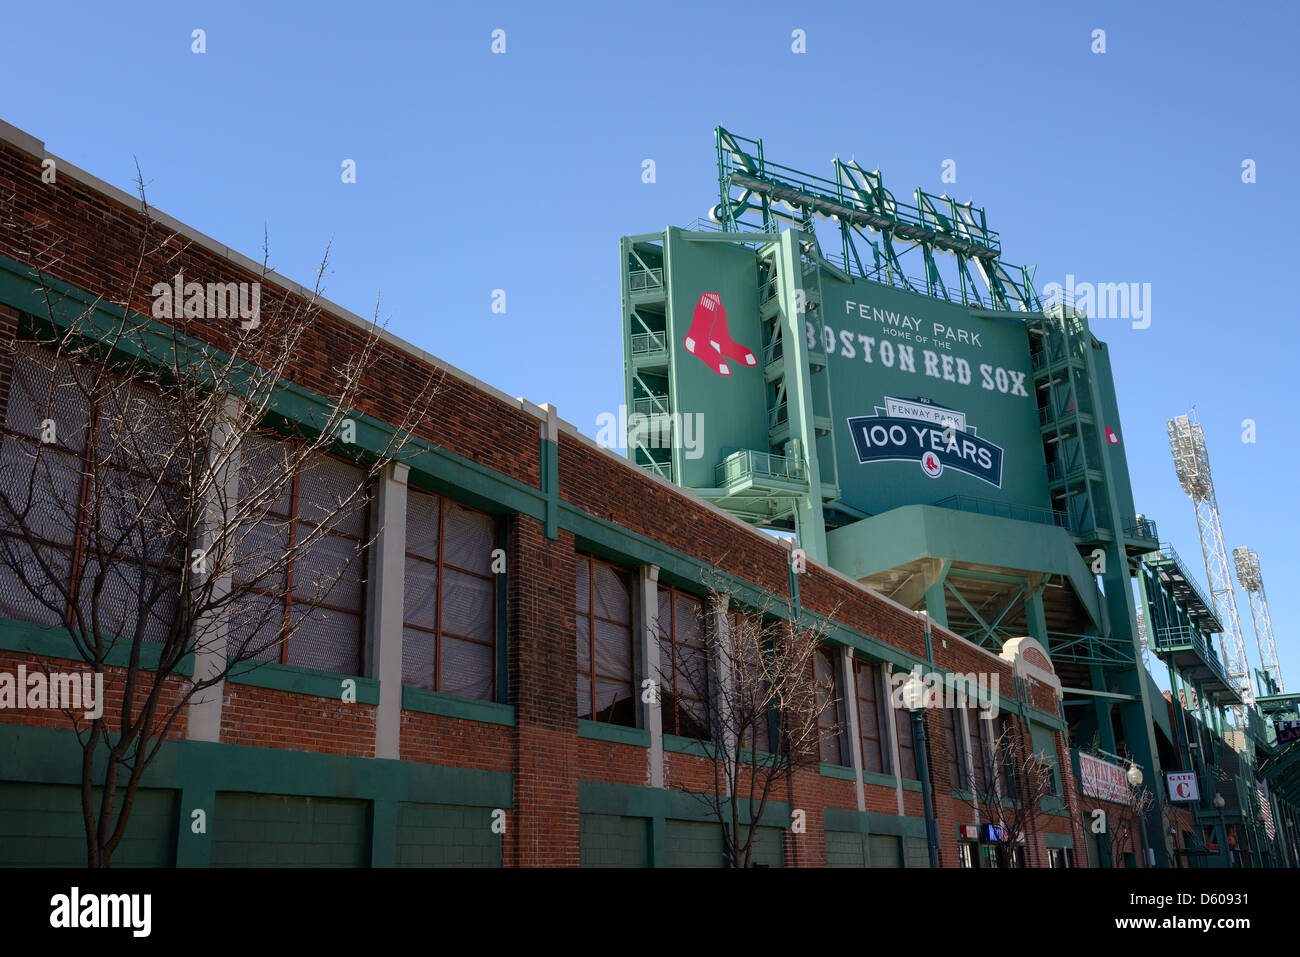 Fenway Park - Home of the Boston Red Sox baseball team - Boston, Massachusetts Stock Photo